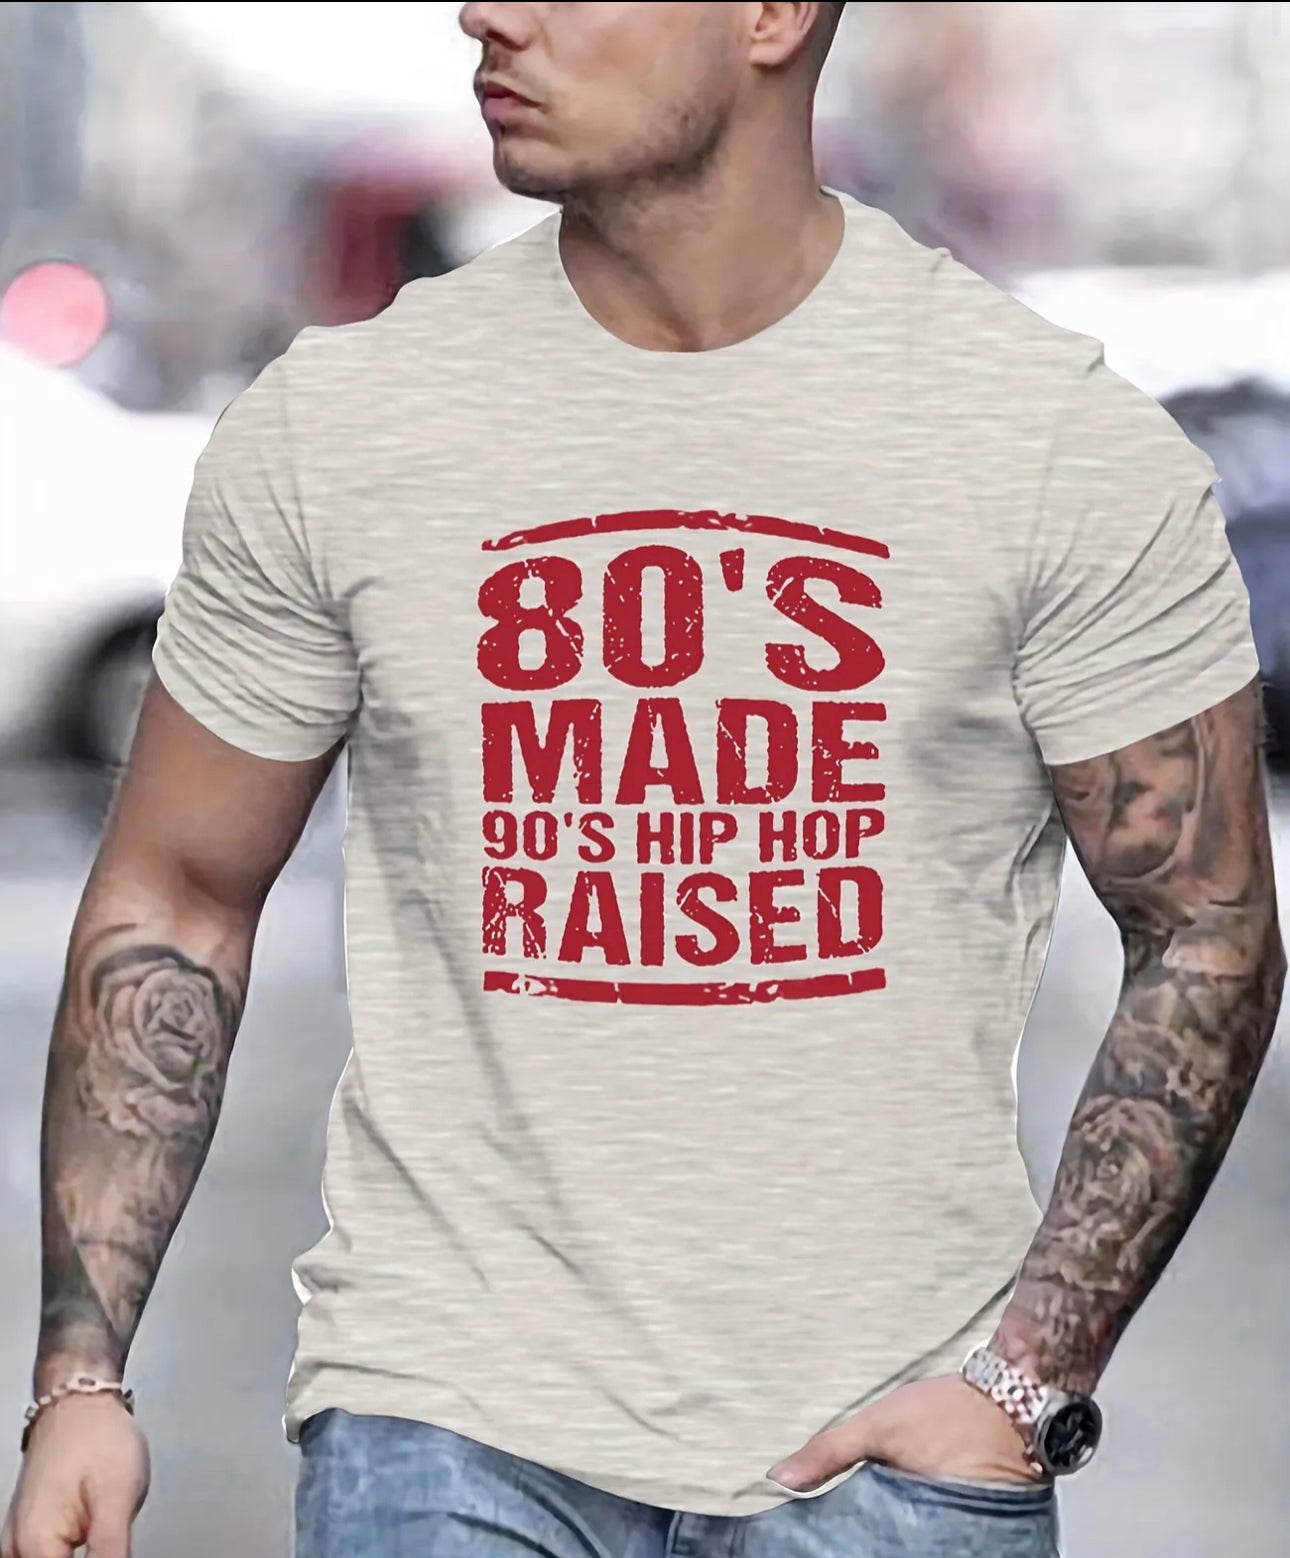 80’s Made men’s shirt